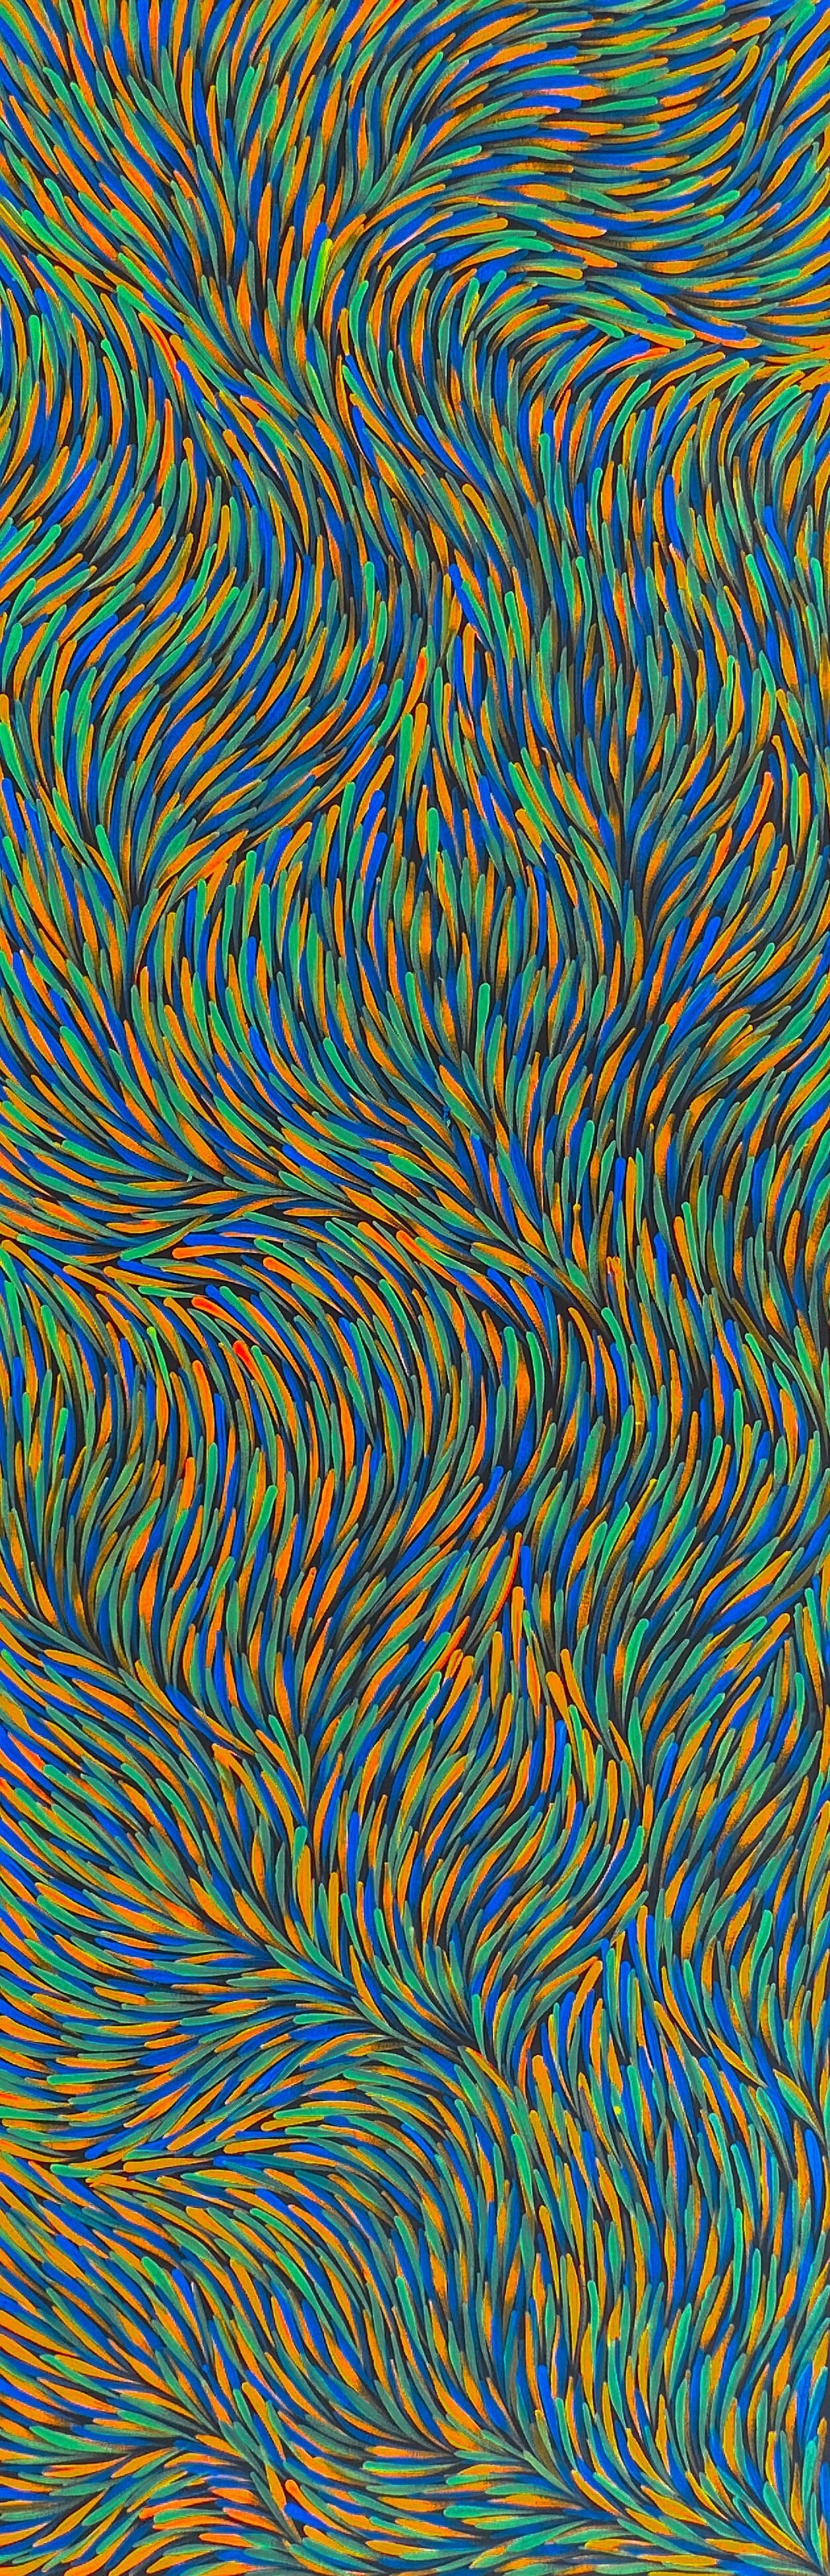 Rosemary Pitjara Petyarre + Bush Medicine Leaves + Indigneous art + Aboriginal art + Australian art + orannge + blue + teal + leaves + darwin based gallery + art for sale + artwork for sale + painting for sale + utopia